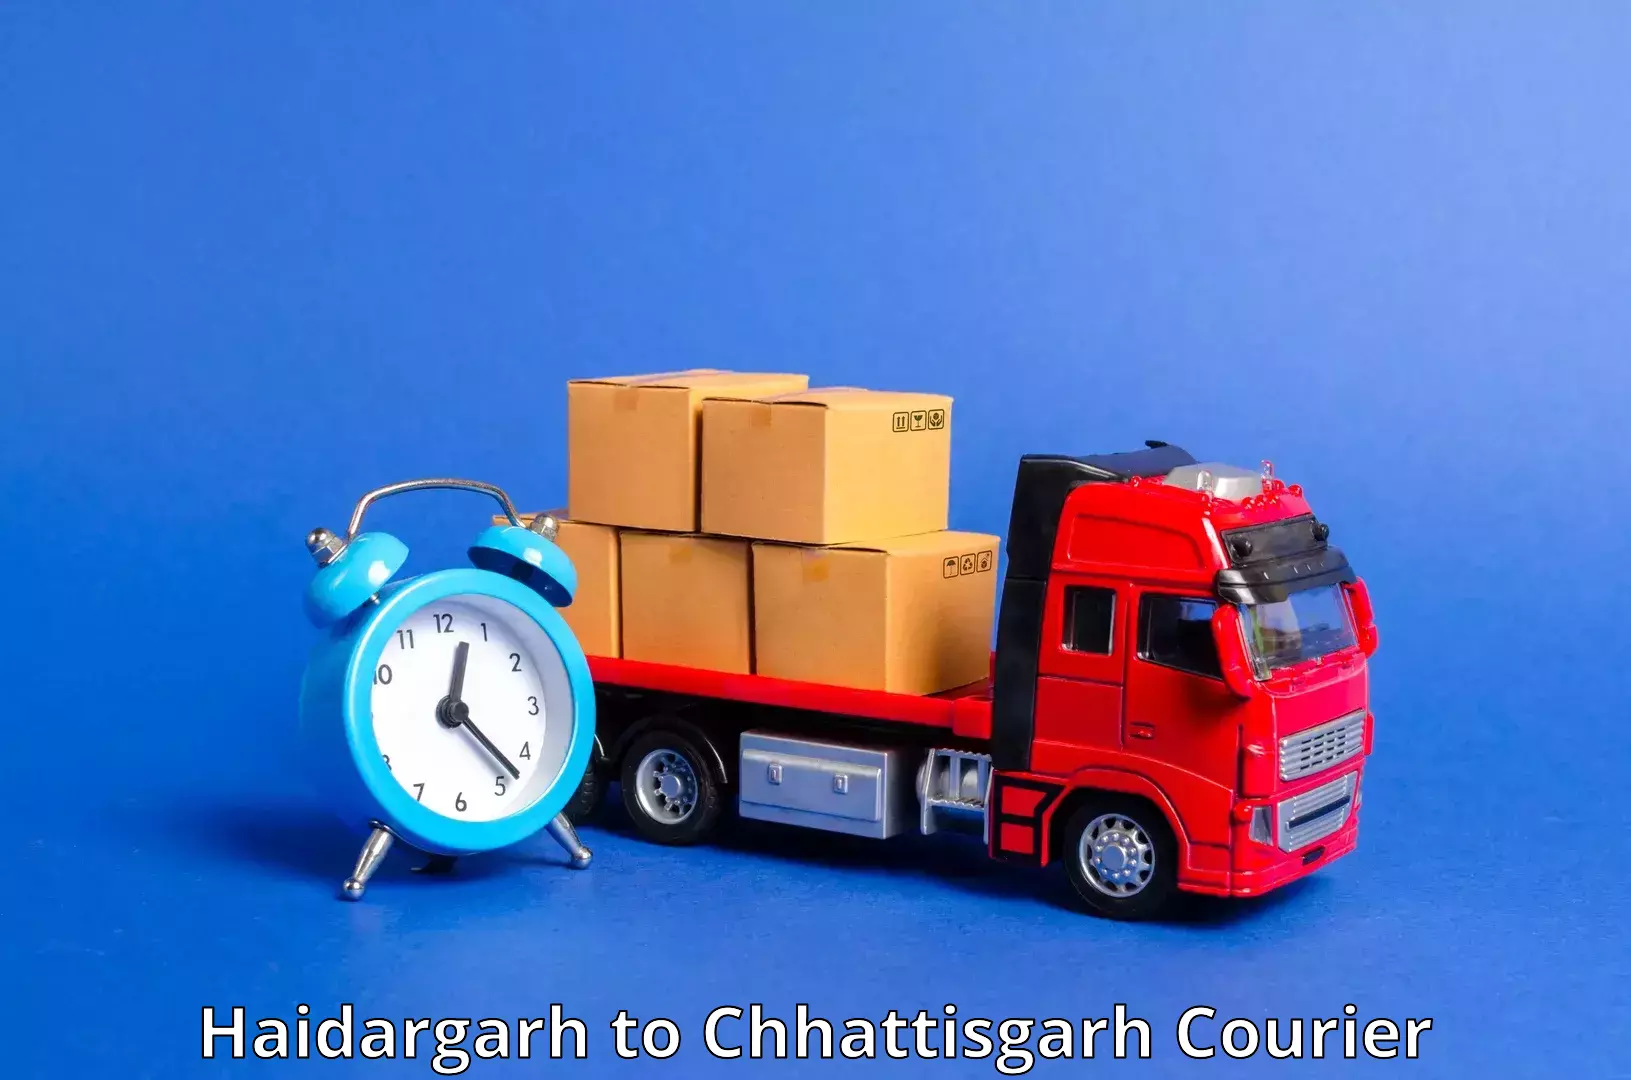 Bulk courier orders Haidargarh to Raipur